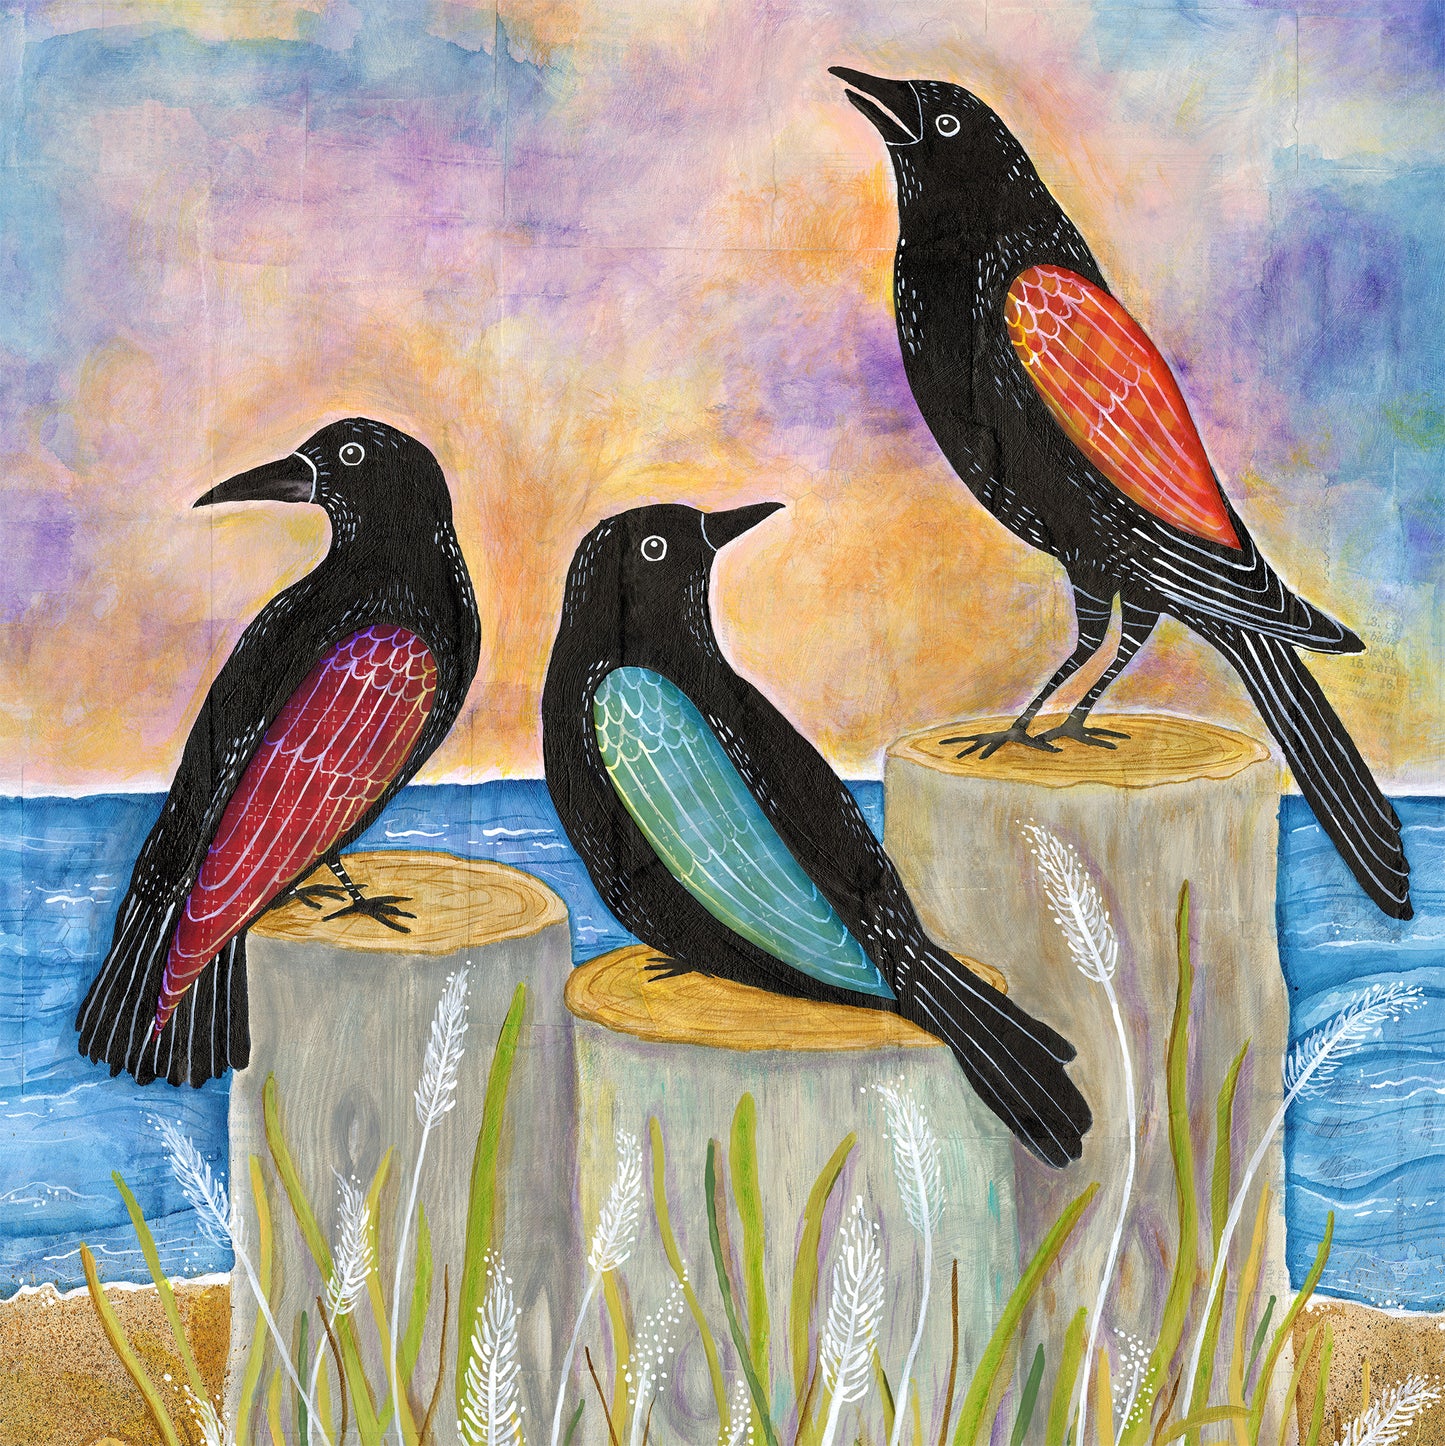 Three Crows at Sunset - Print